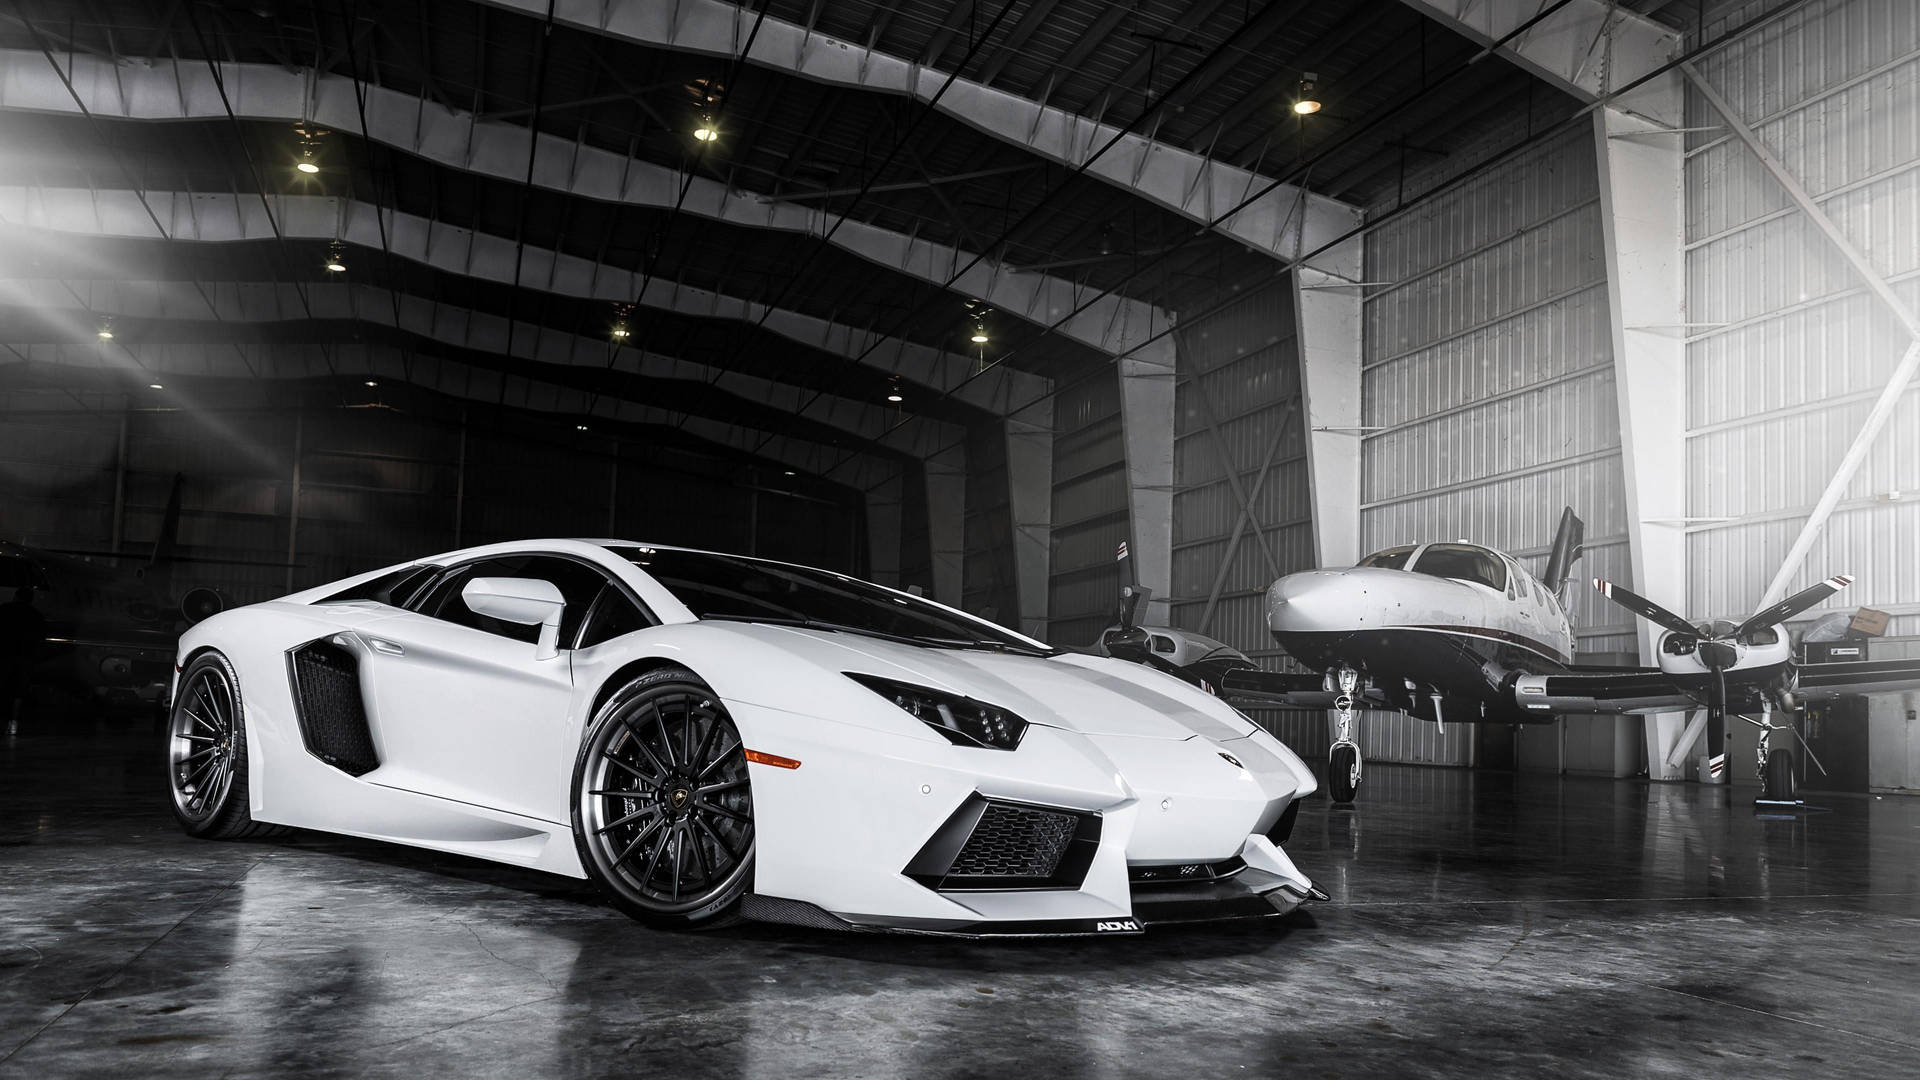 Cool Cars Feature: Sleek White Lamborghini Wallpaper